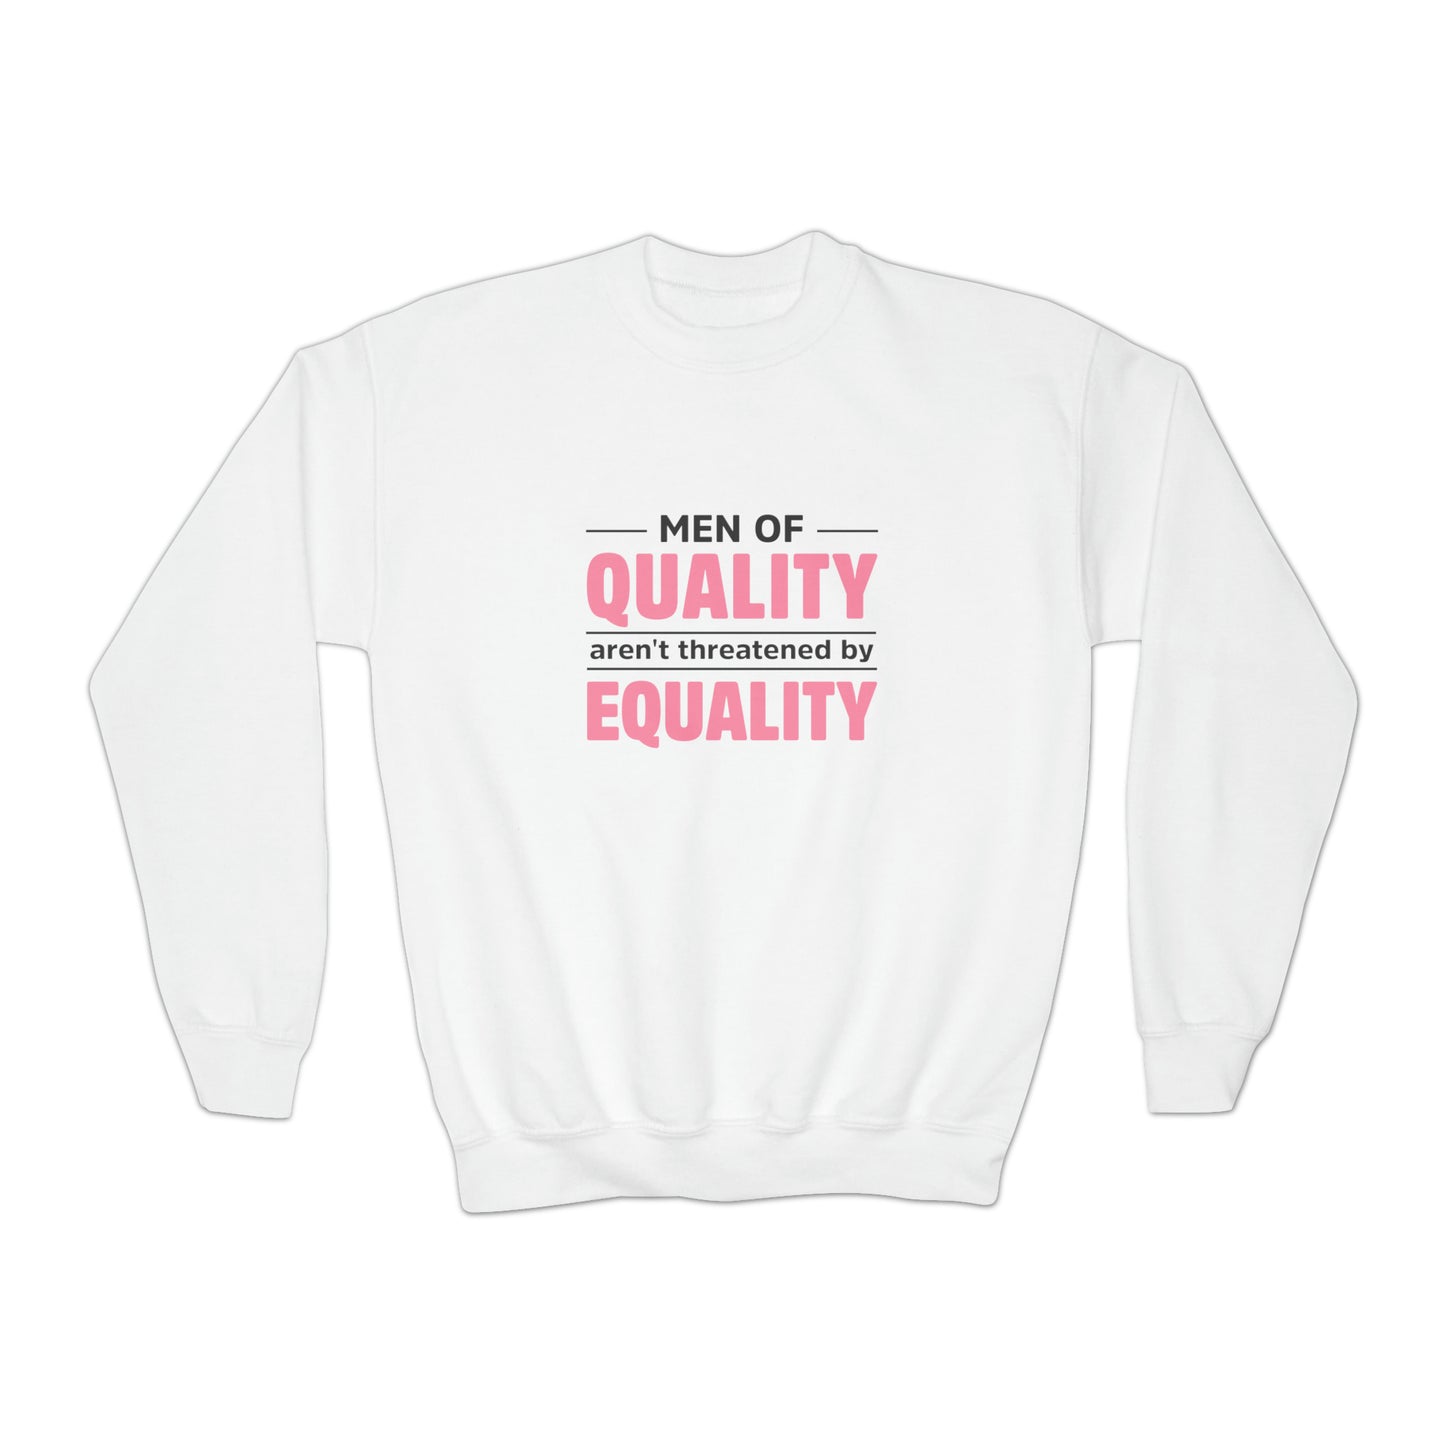 “Men of Quality” Youth Sweatshirt